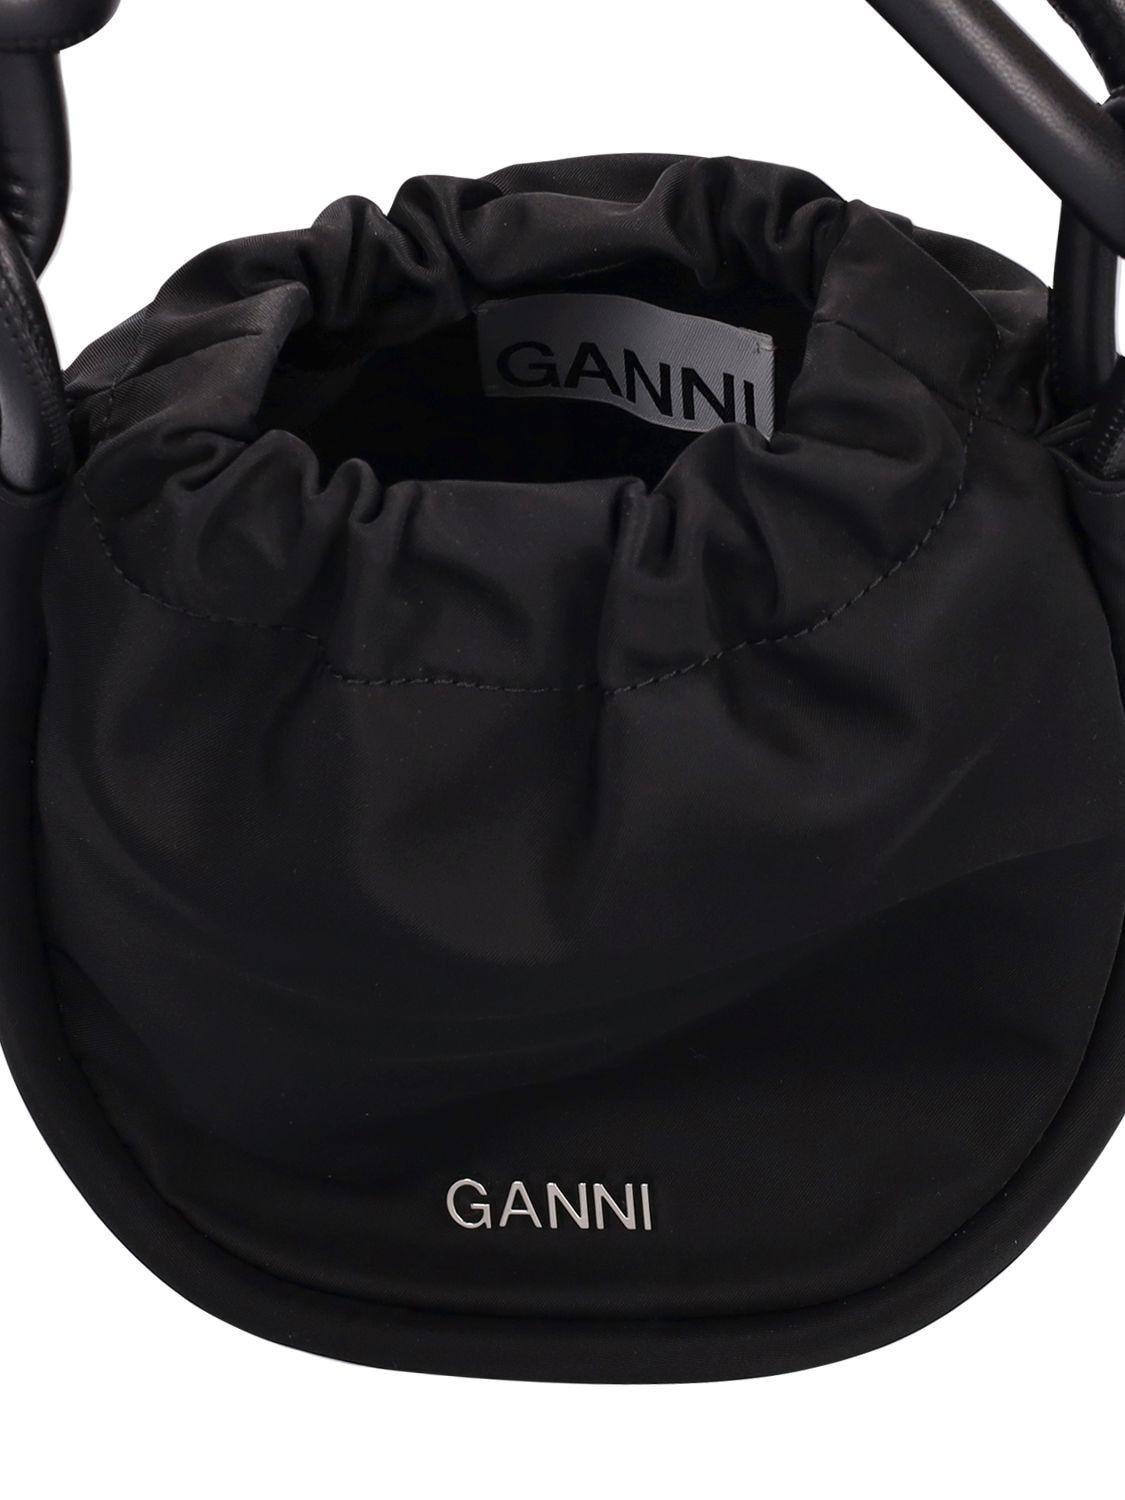 GANNI Women's Knot Small Bucket in Black GANNI